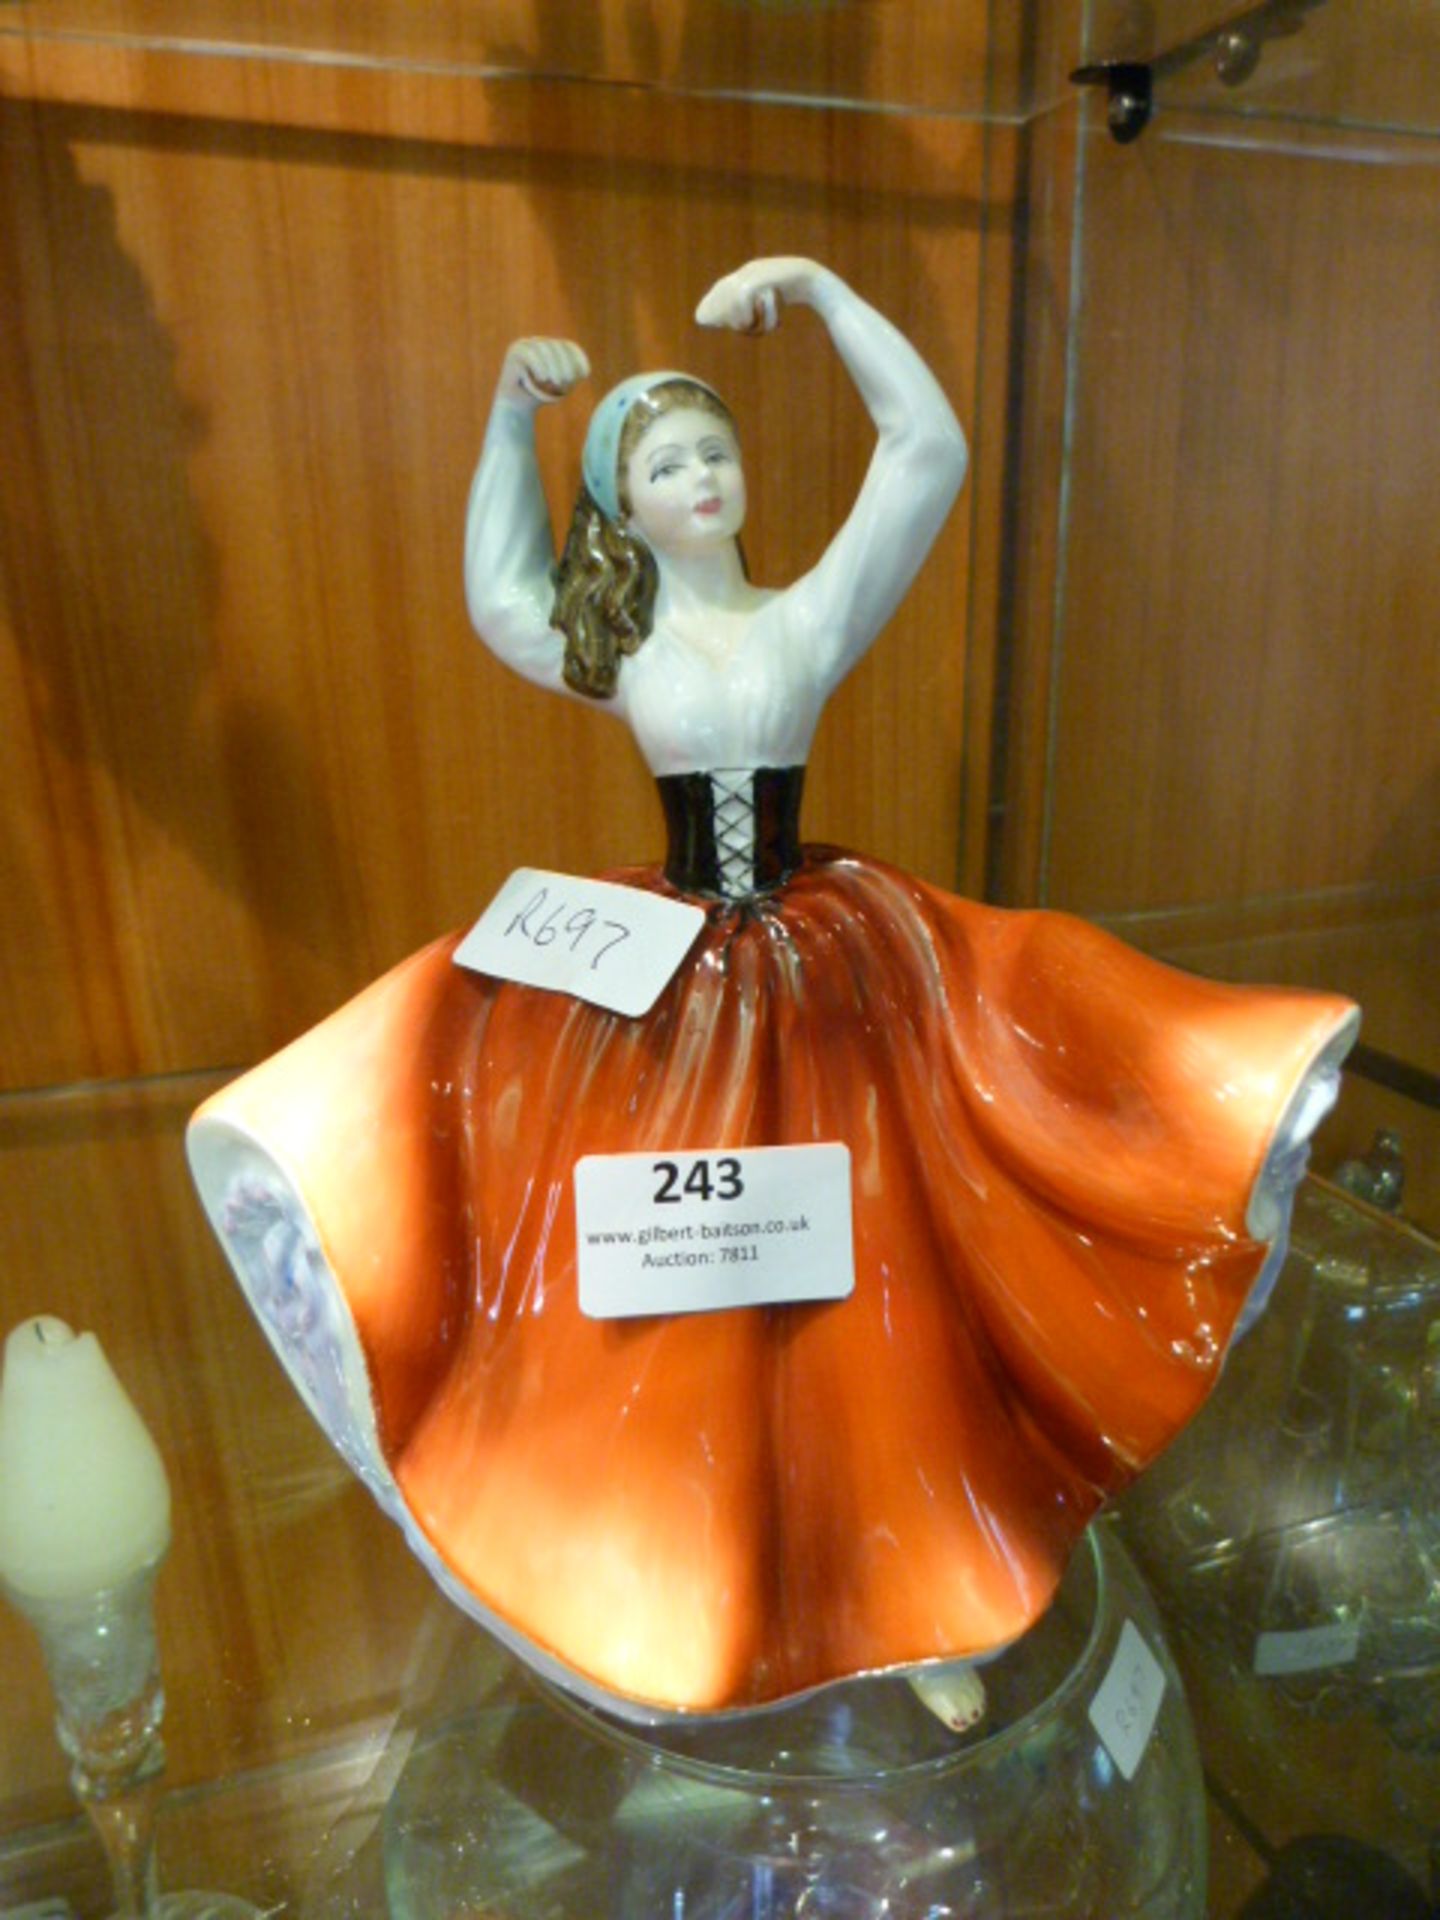 Royal Doulton Figurine "Karen"